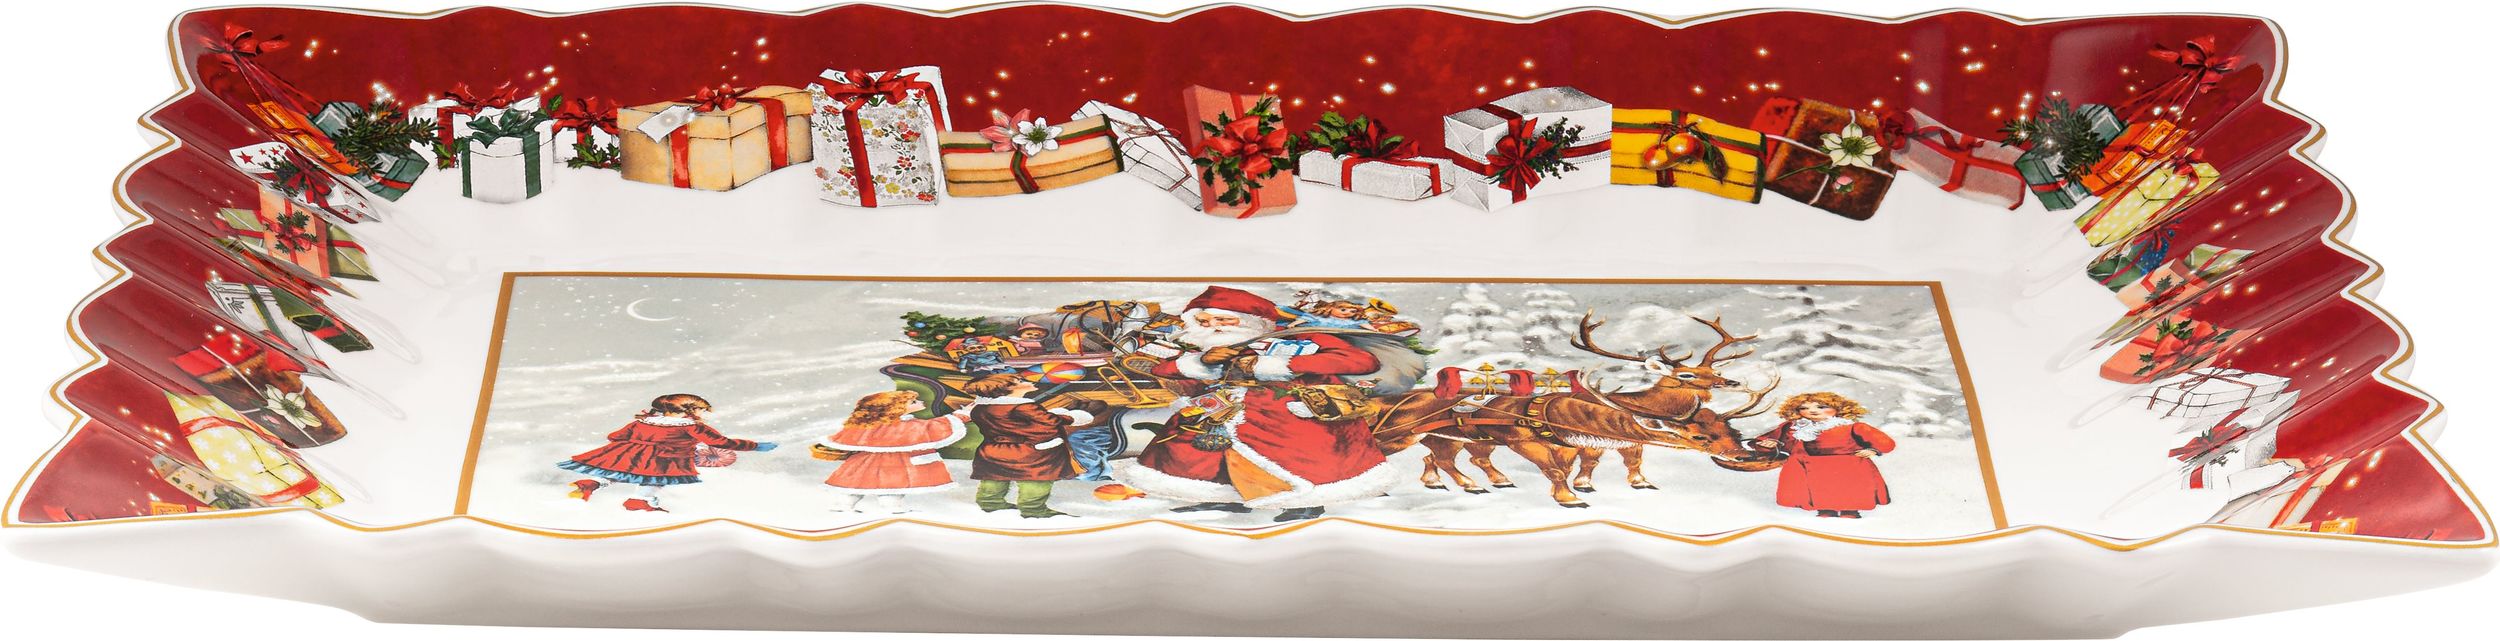 Villeroy & Boch Serving Dish Toy's Fantasy Santa - 23 x 23 cm 